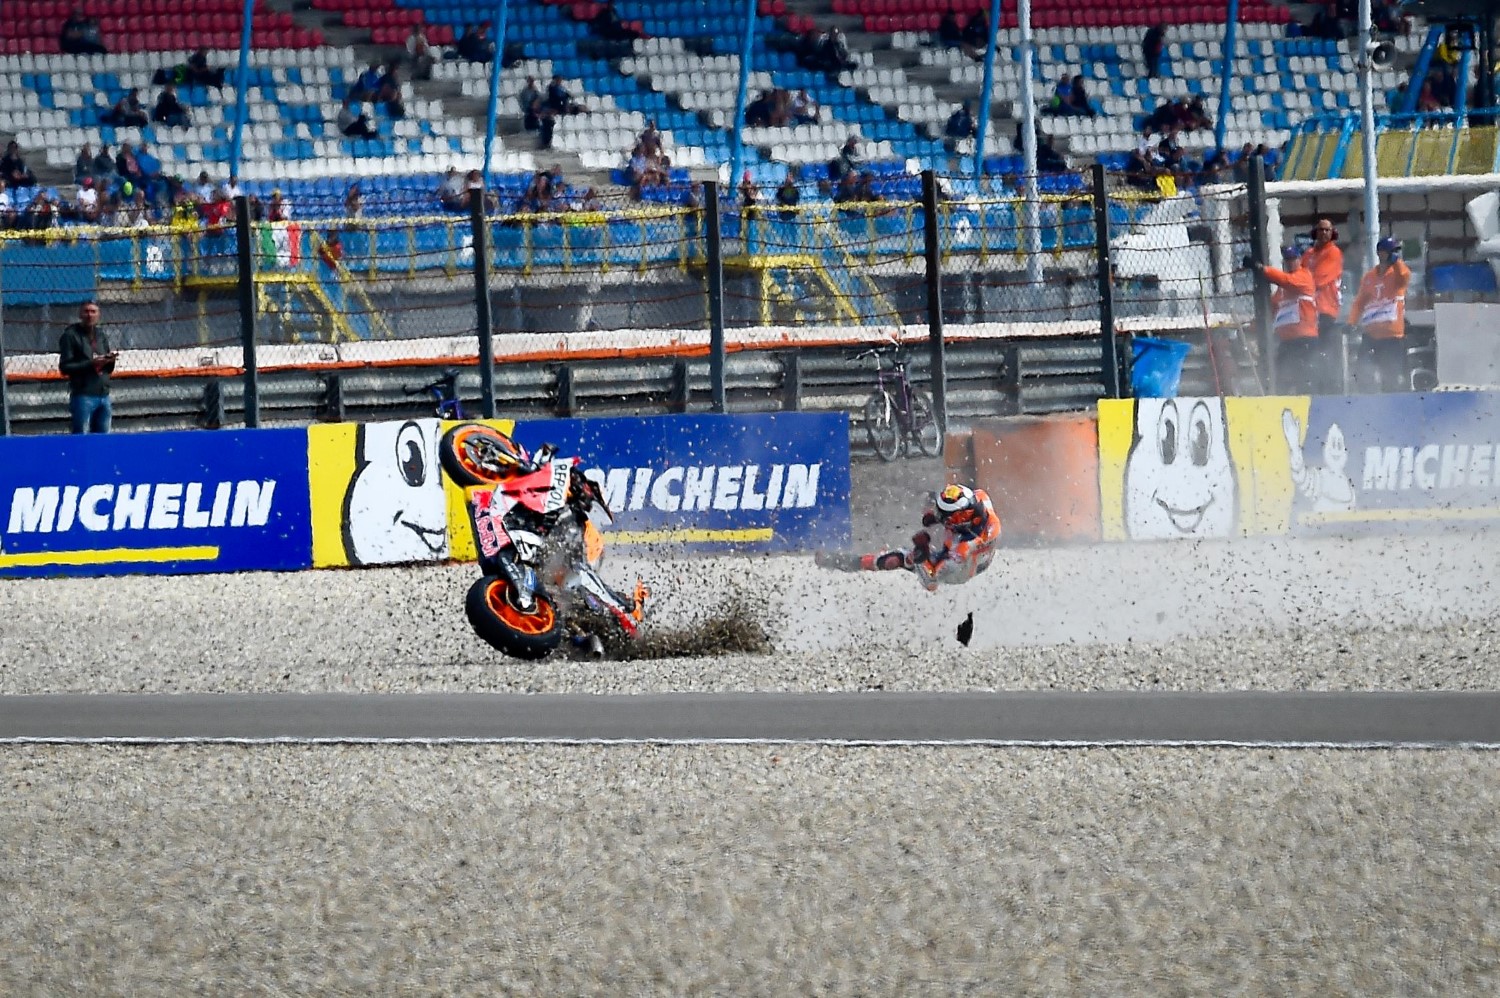 Jorge Lorenzo crashing at Assen, will miss next 2 races